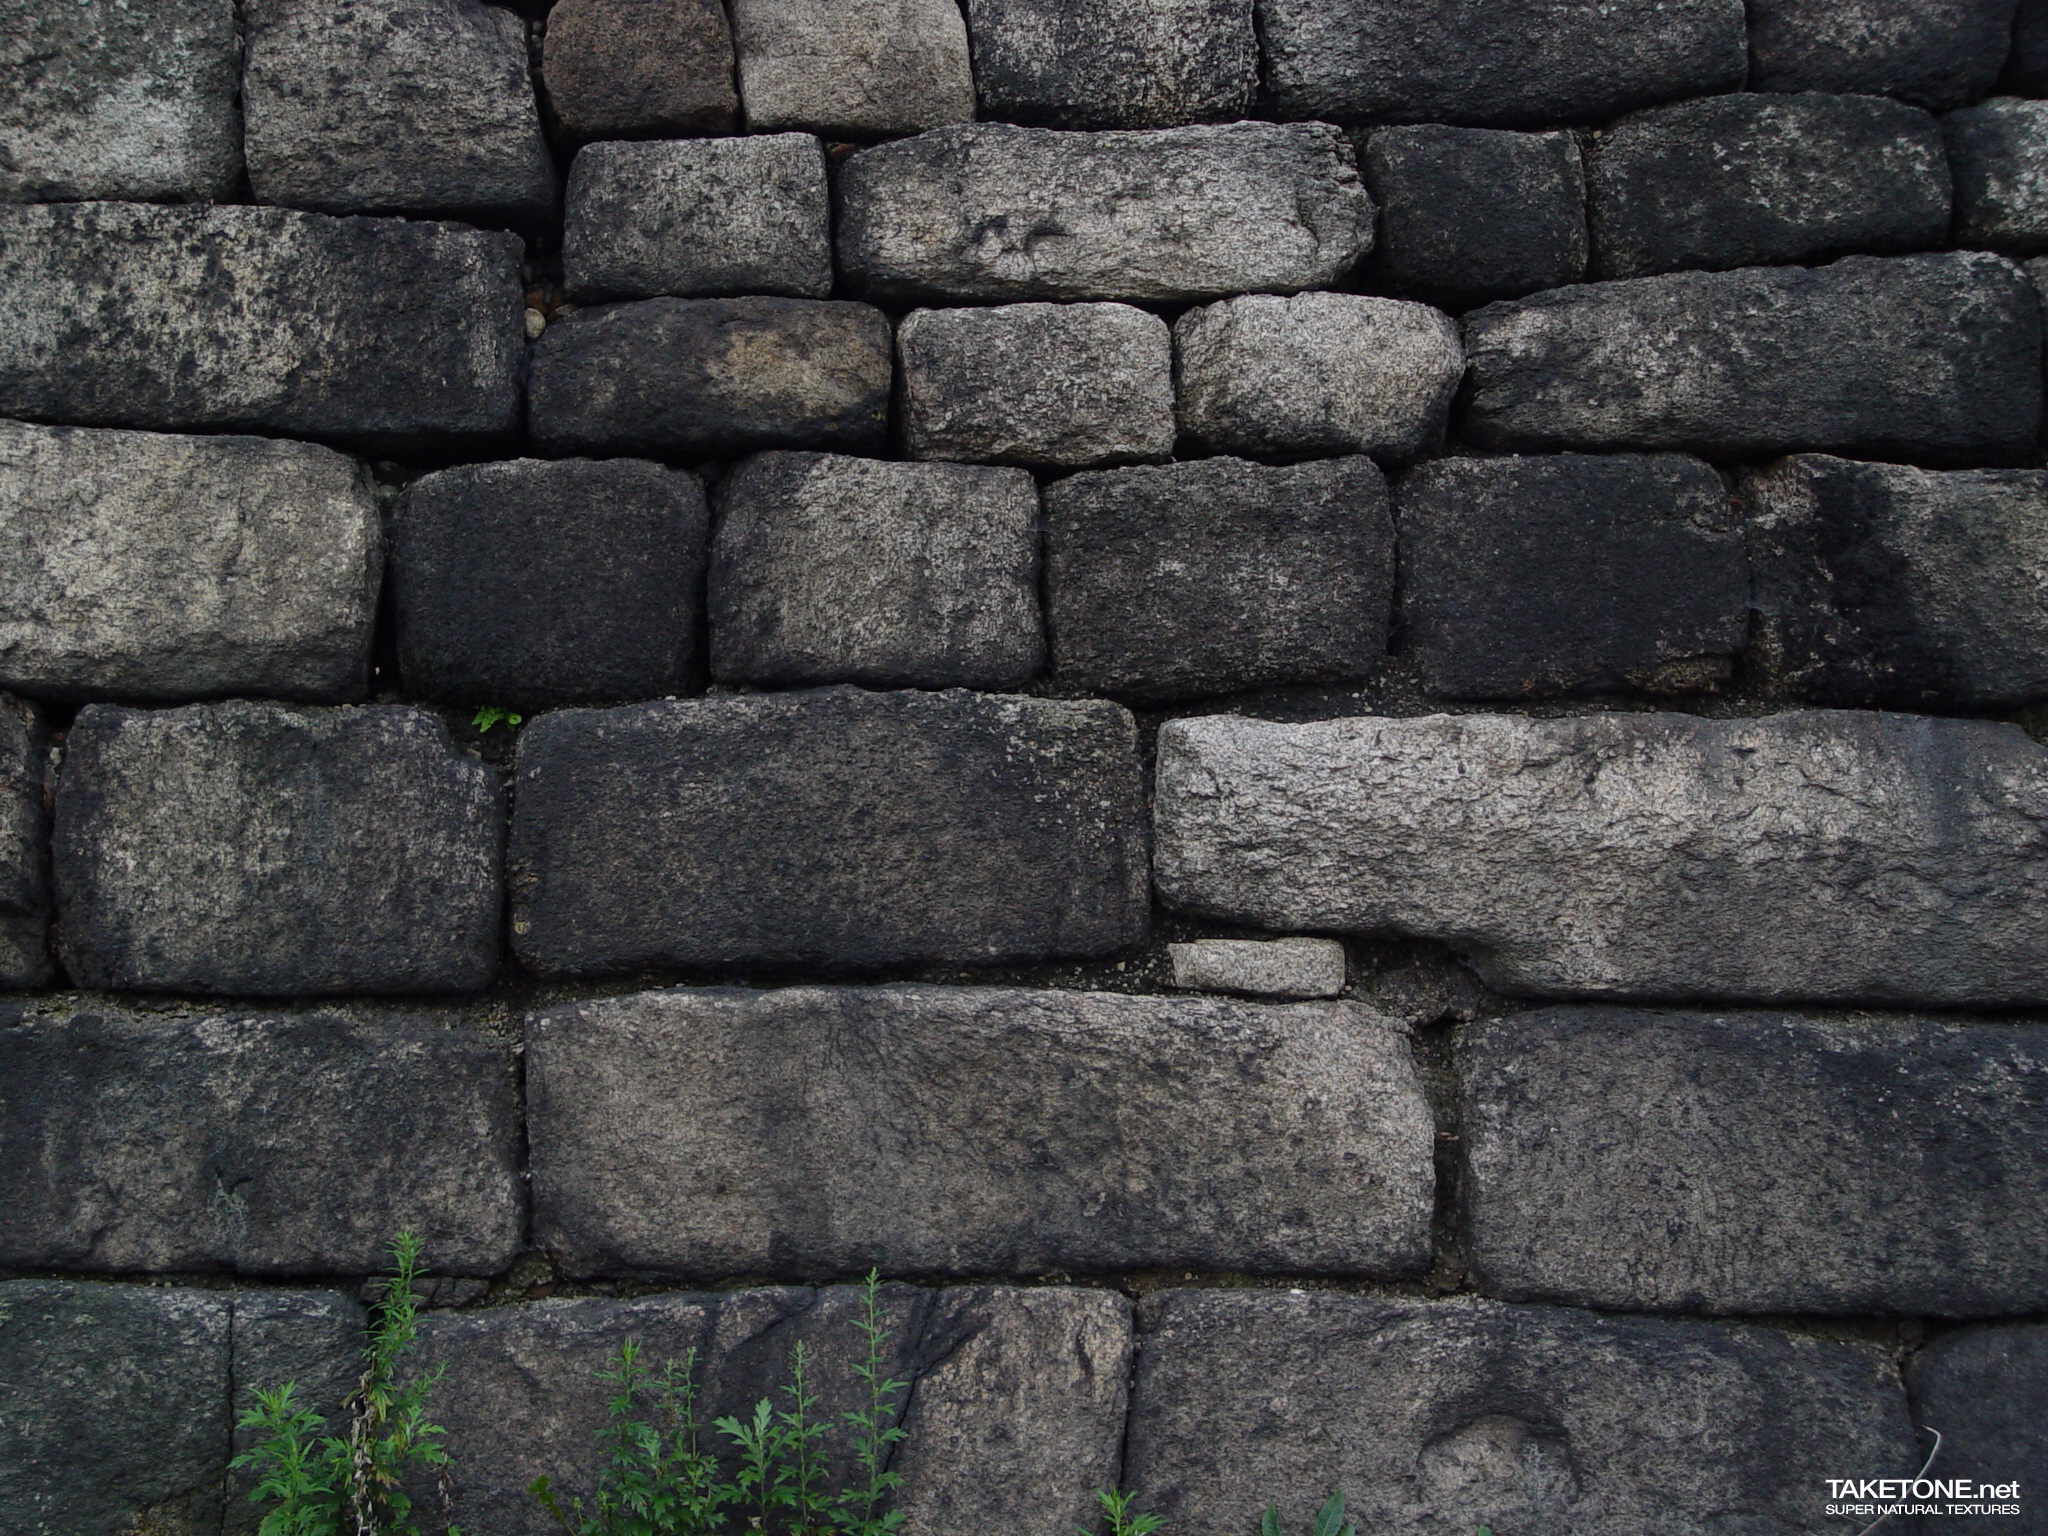 castle brick wallpaper,wall,stone wall,cobblestone,brick,brickwork